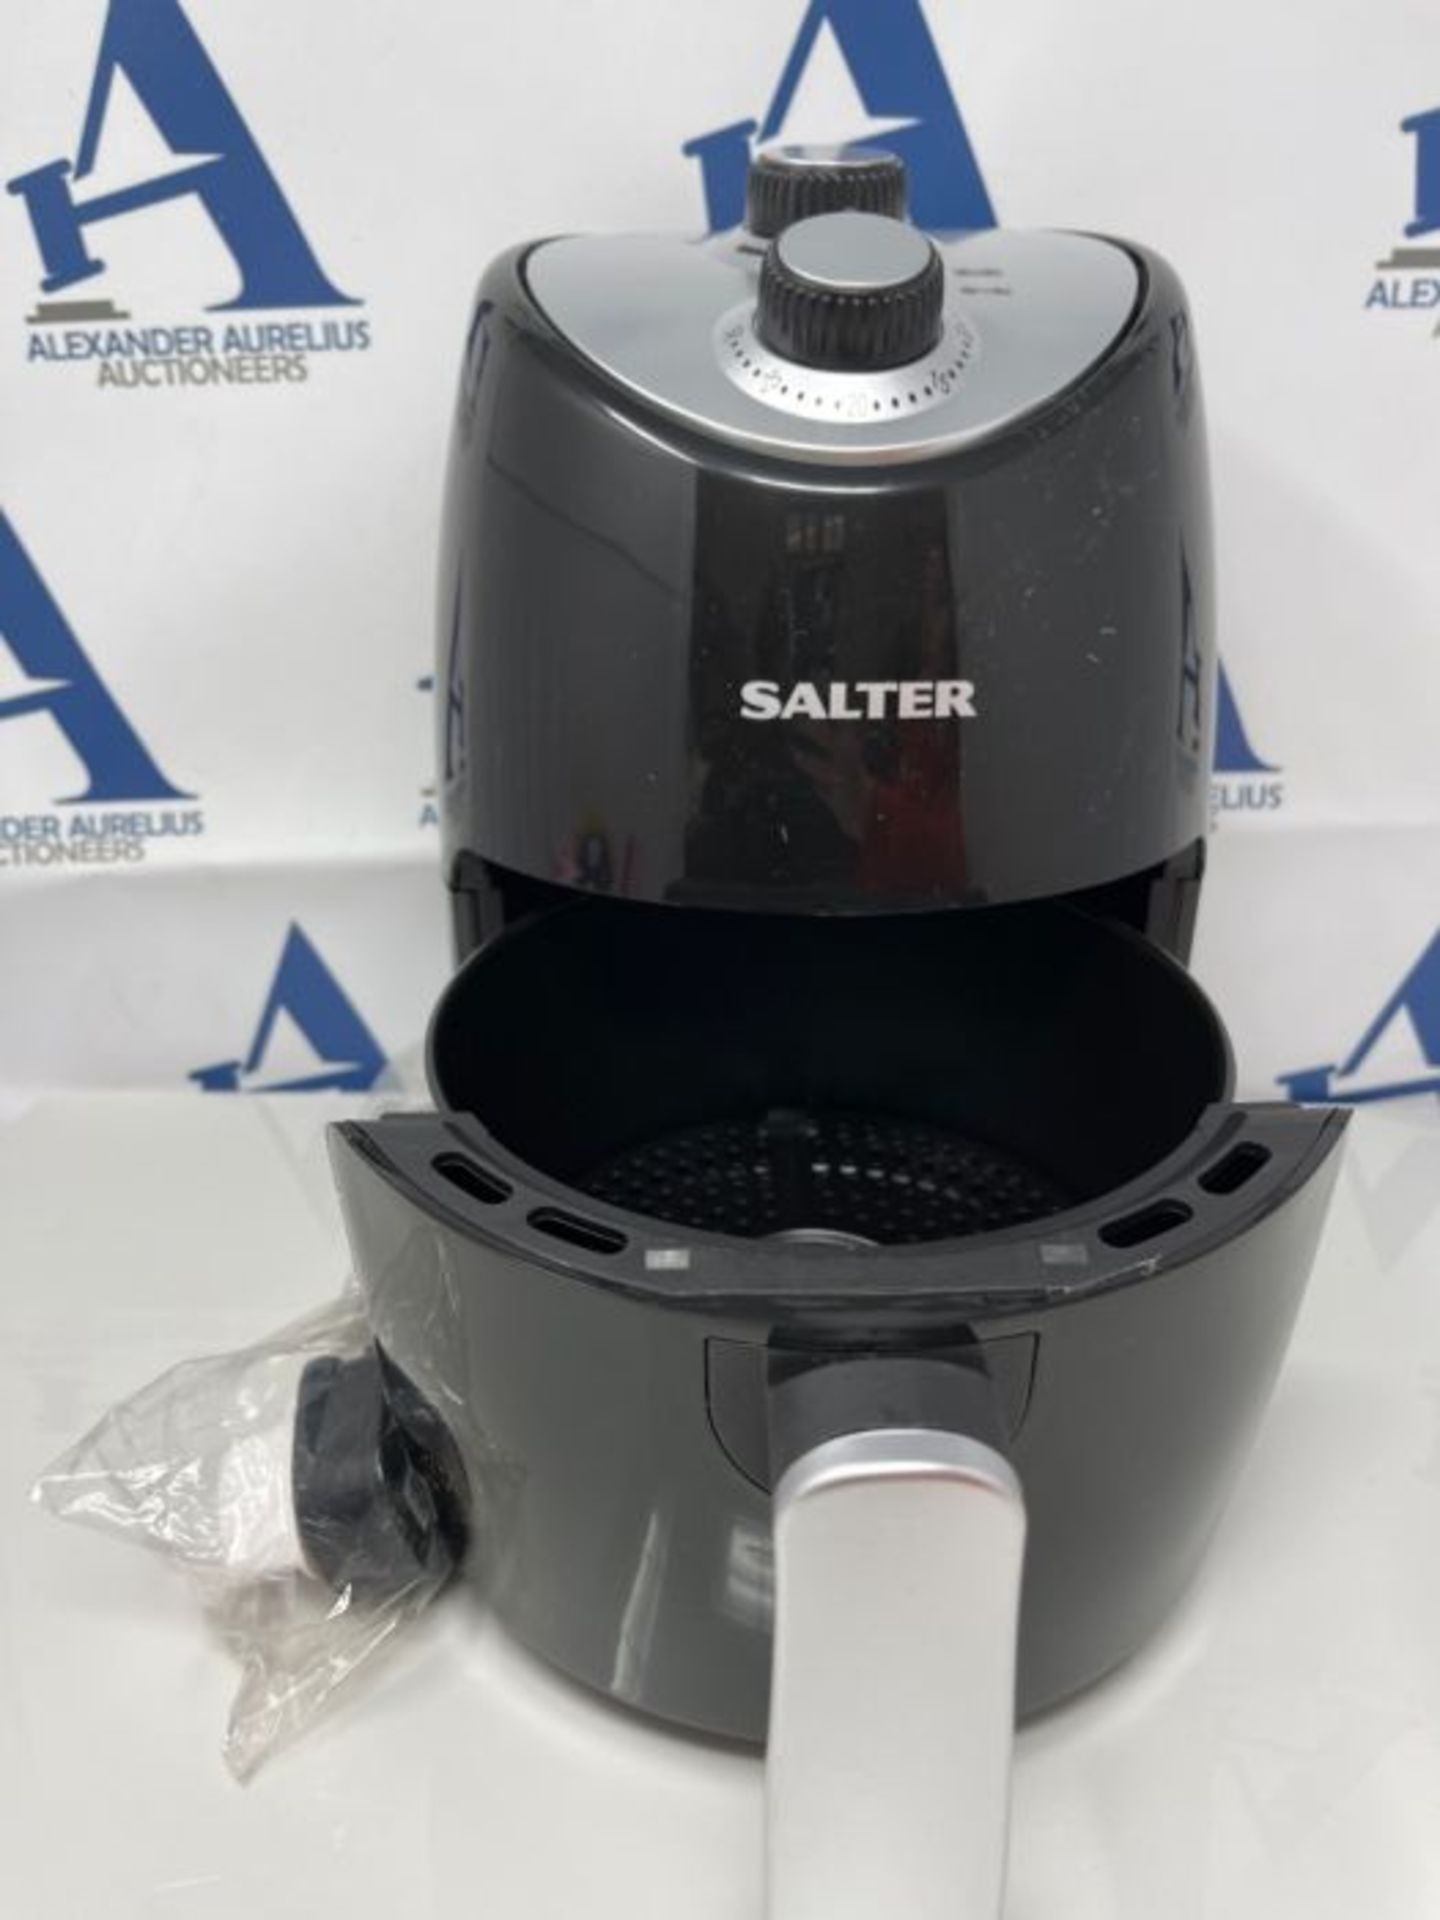 Salter EK2817 Compact 2L Hot Air Fryer, 1000W Fryer, Removable Frying Rack & 30 Minute - Image 3 of 3